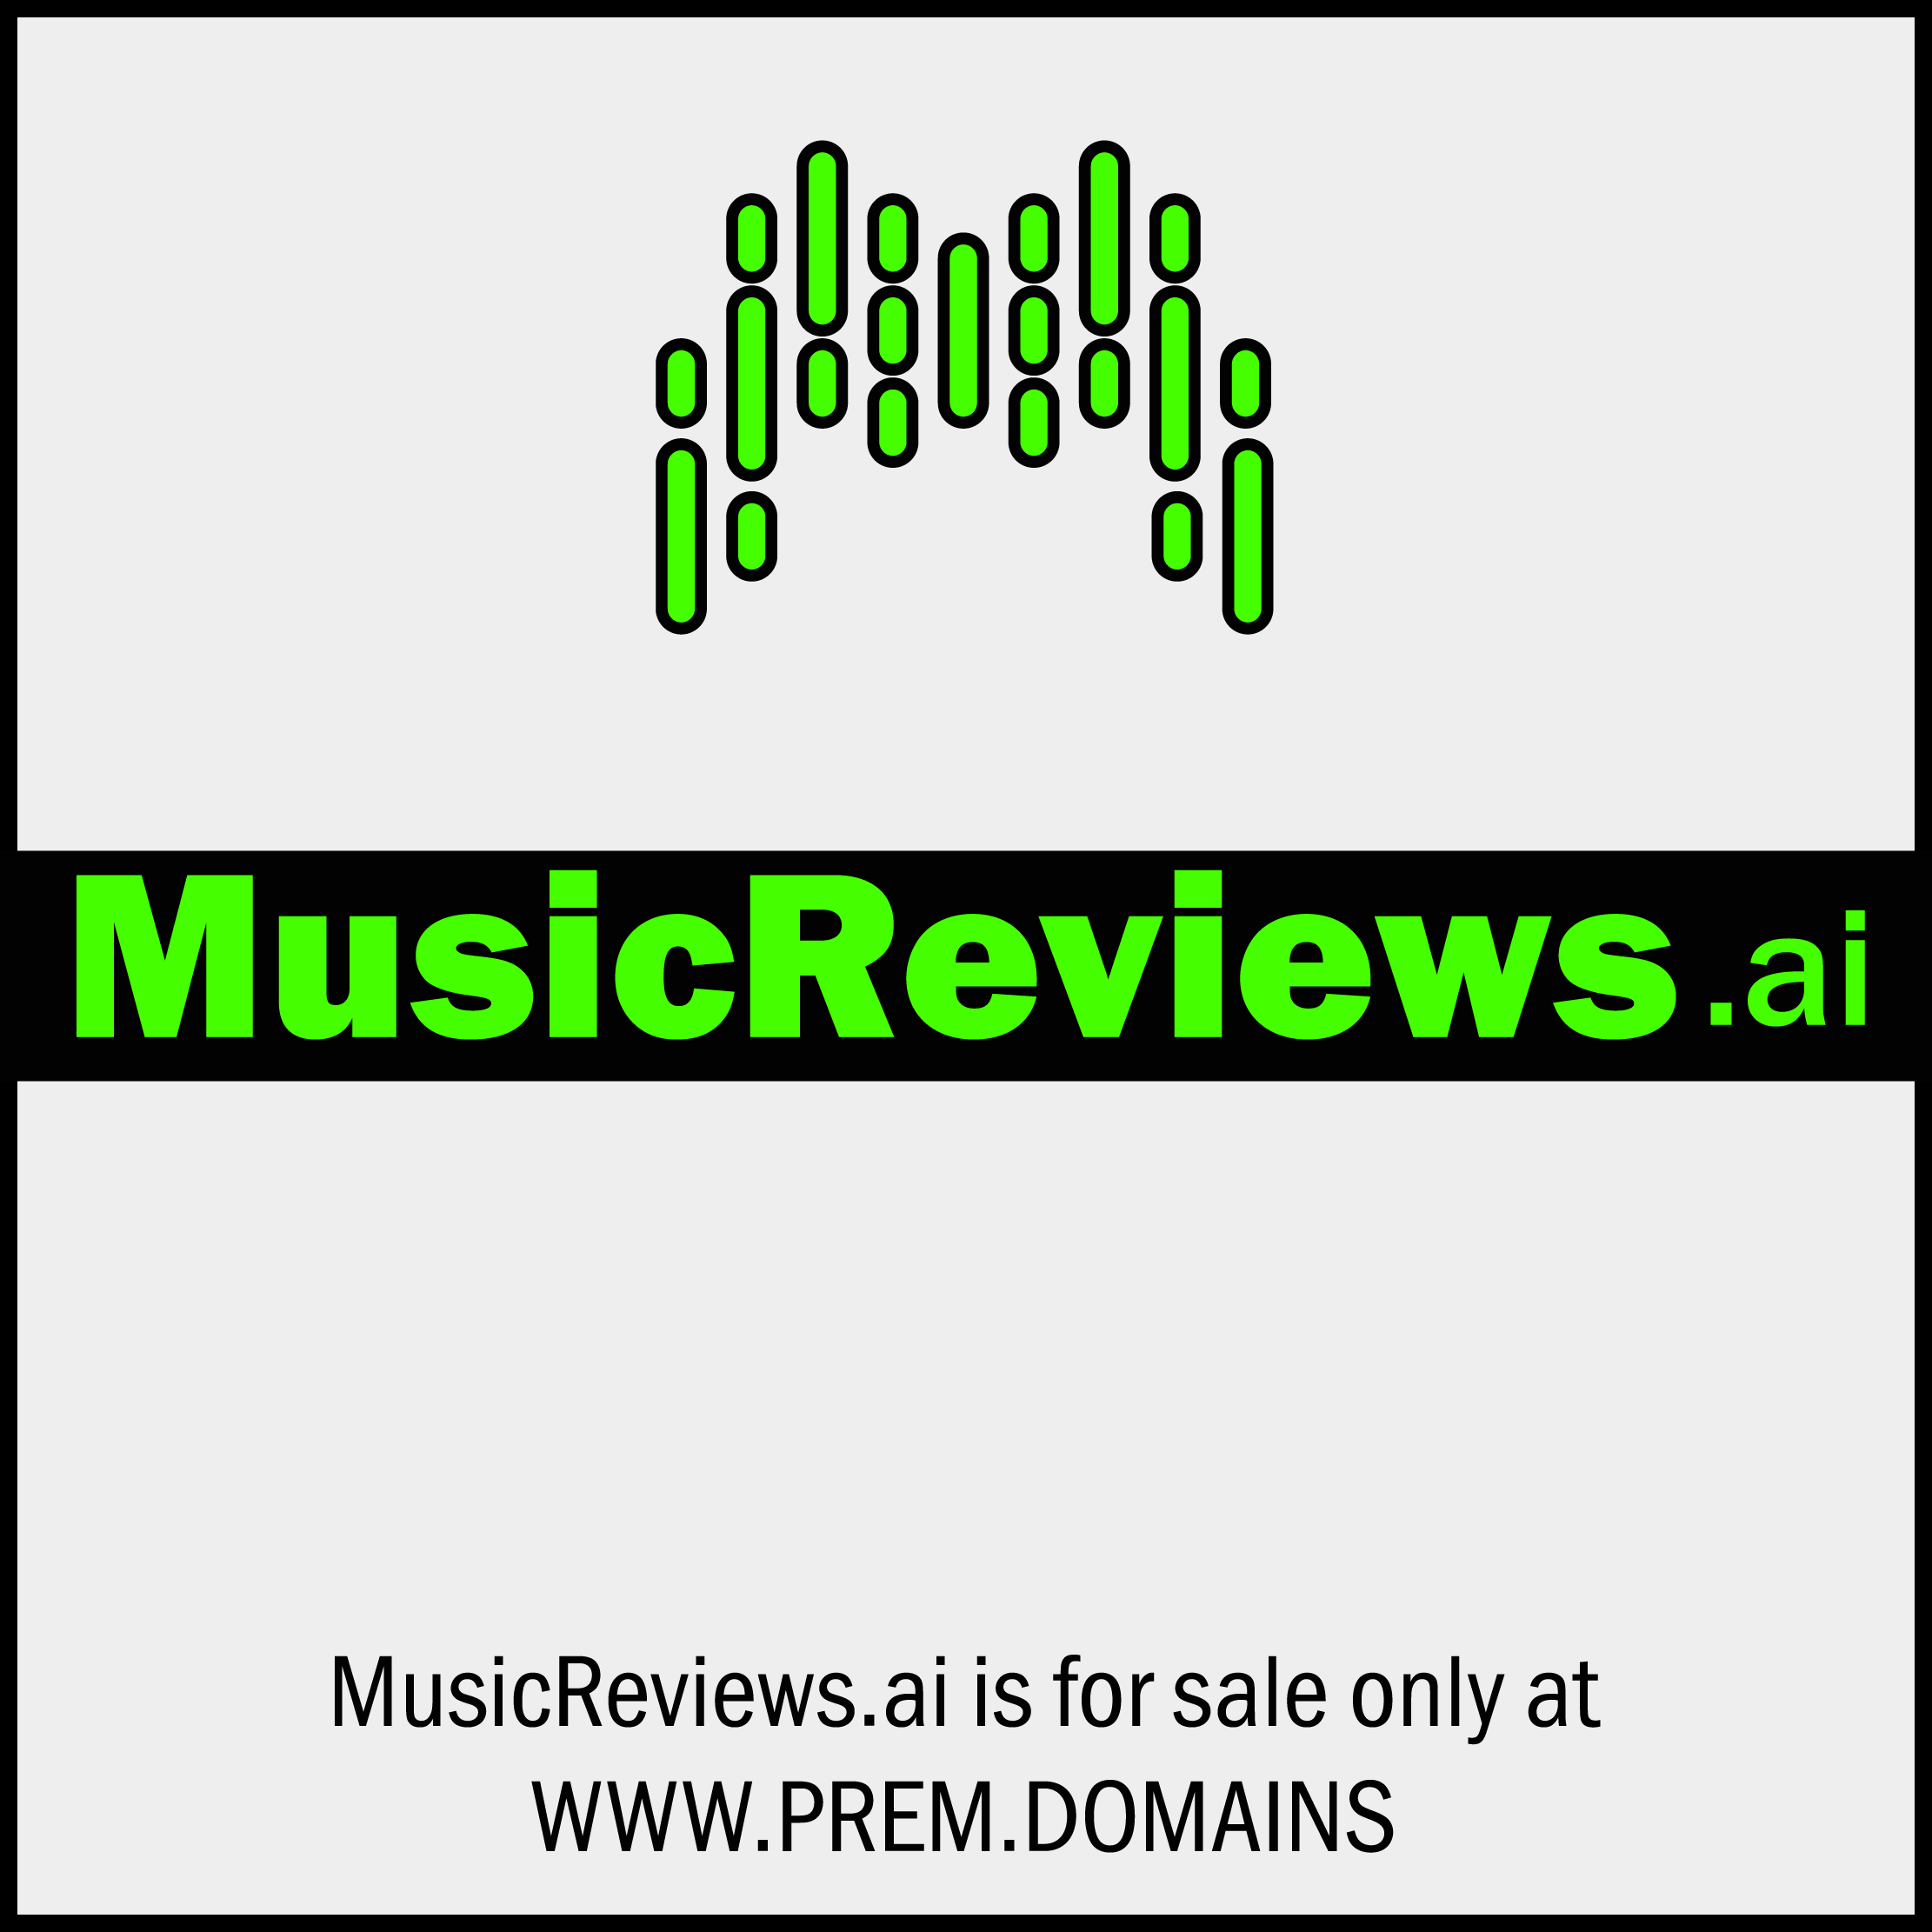 musicreviews.ai custom logo product card image